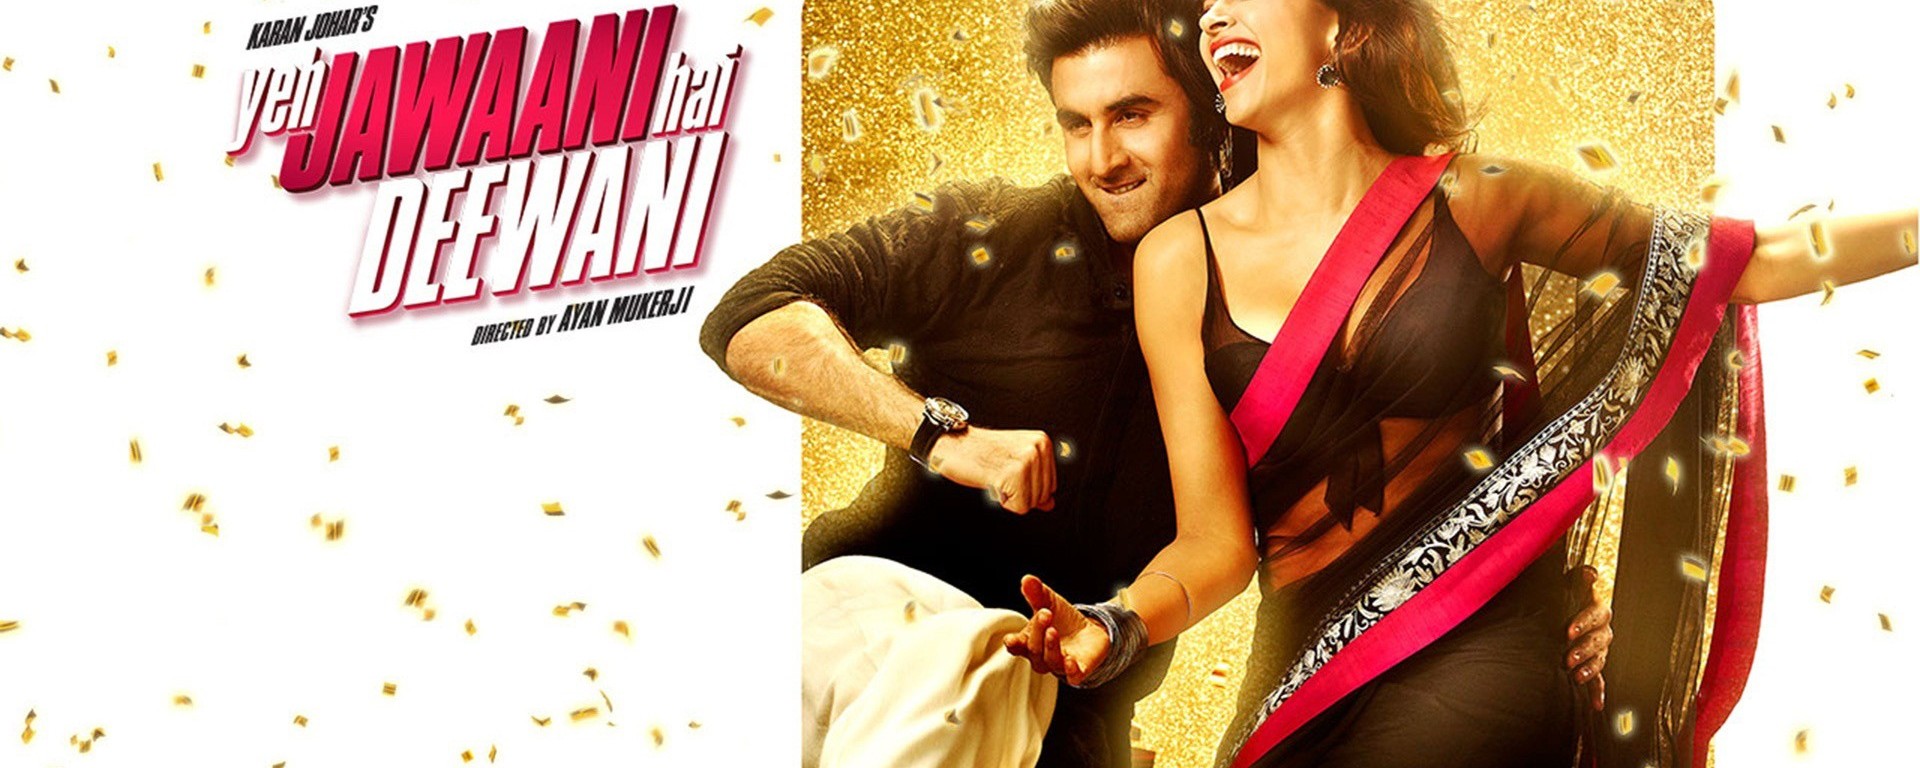 Must Watch Movies In Bollywood: Yeh Jawaani Hai Deewani